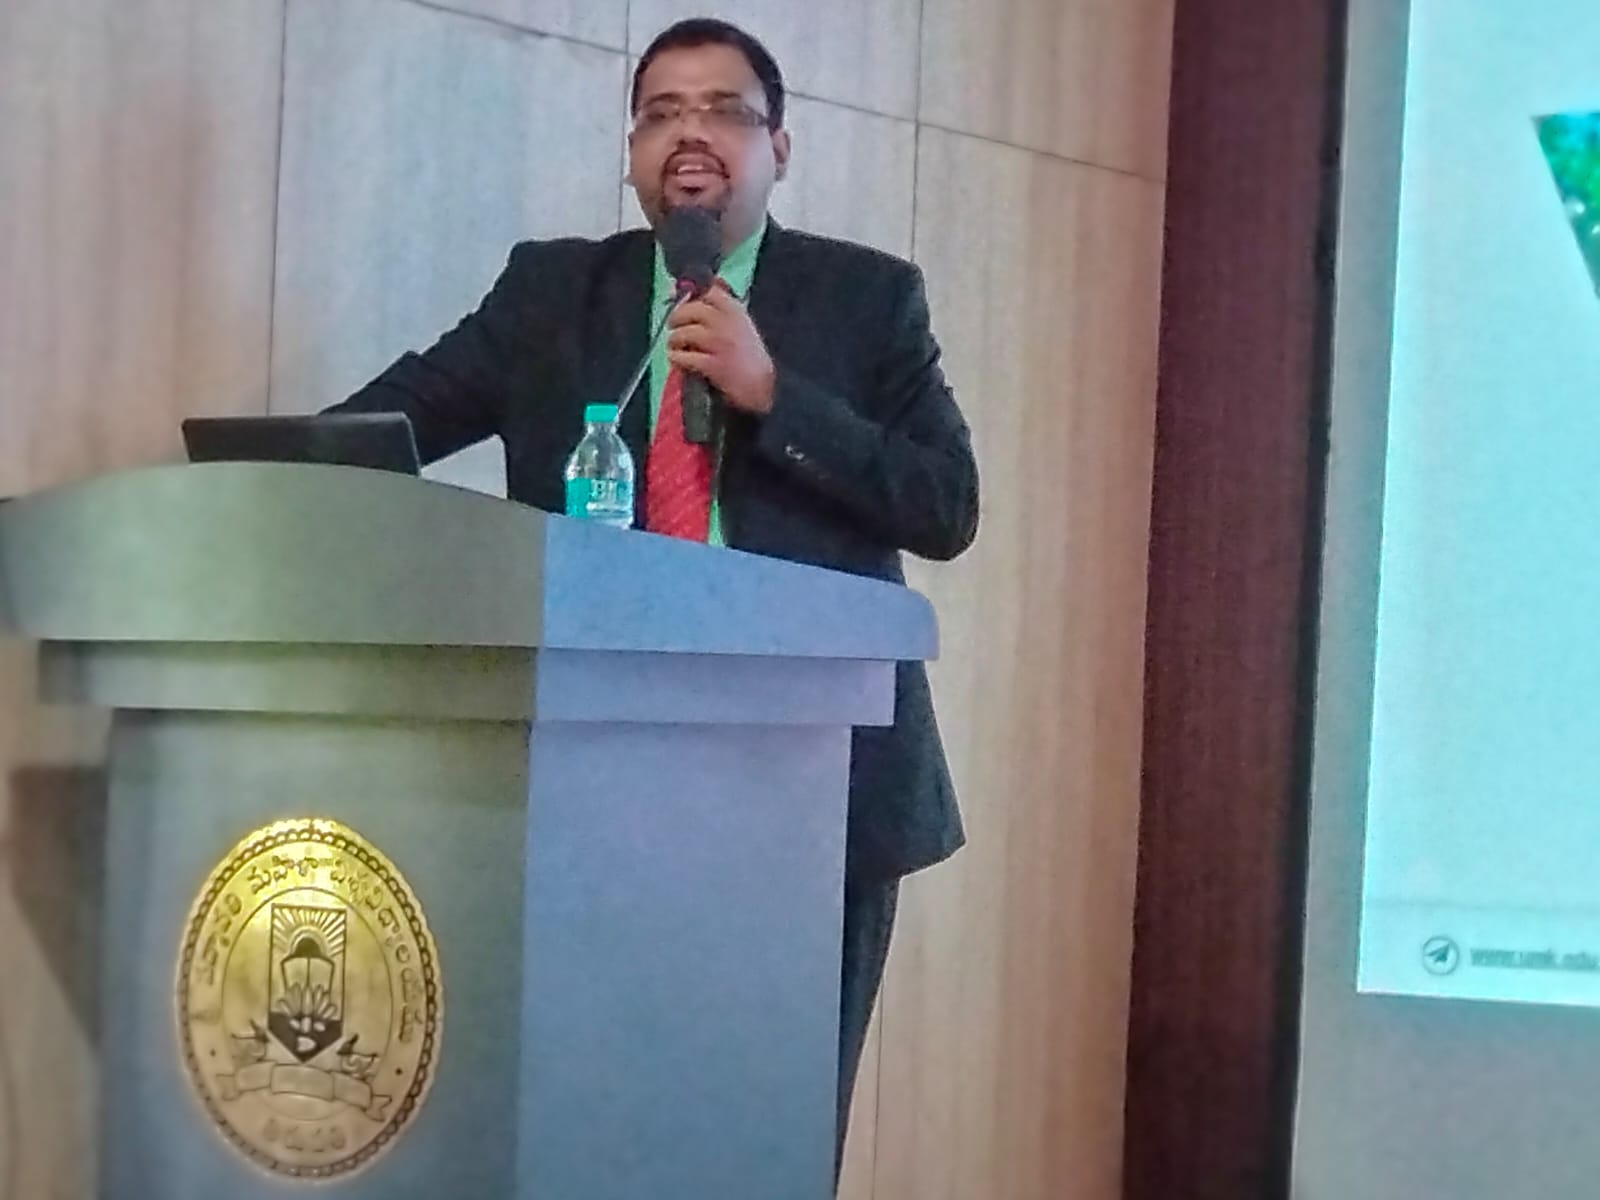 Address by Dr. Mohammad Arifulla from University of Malaysia (UMK)